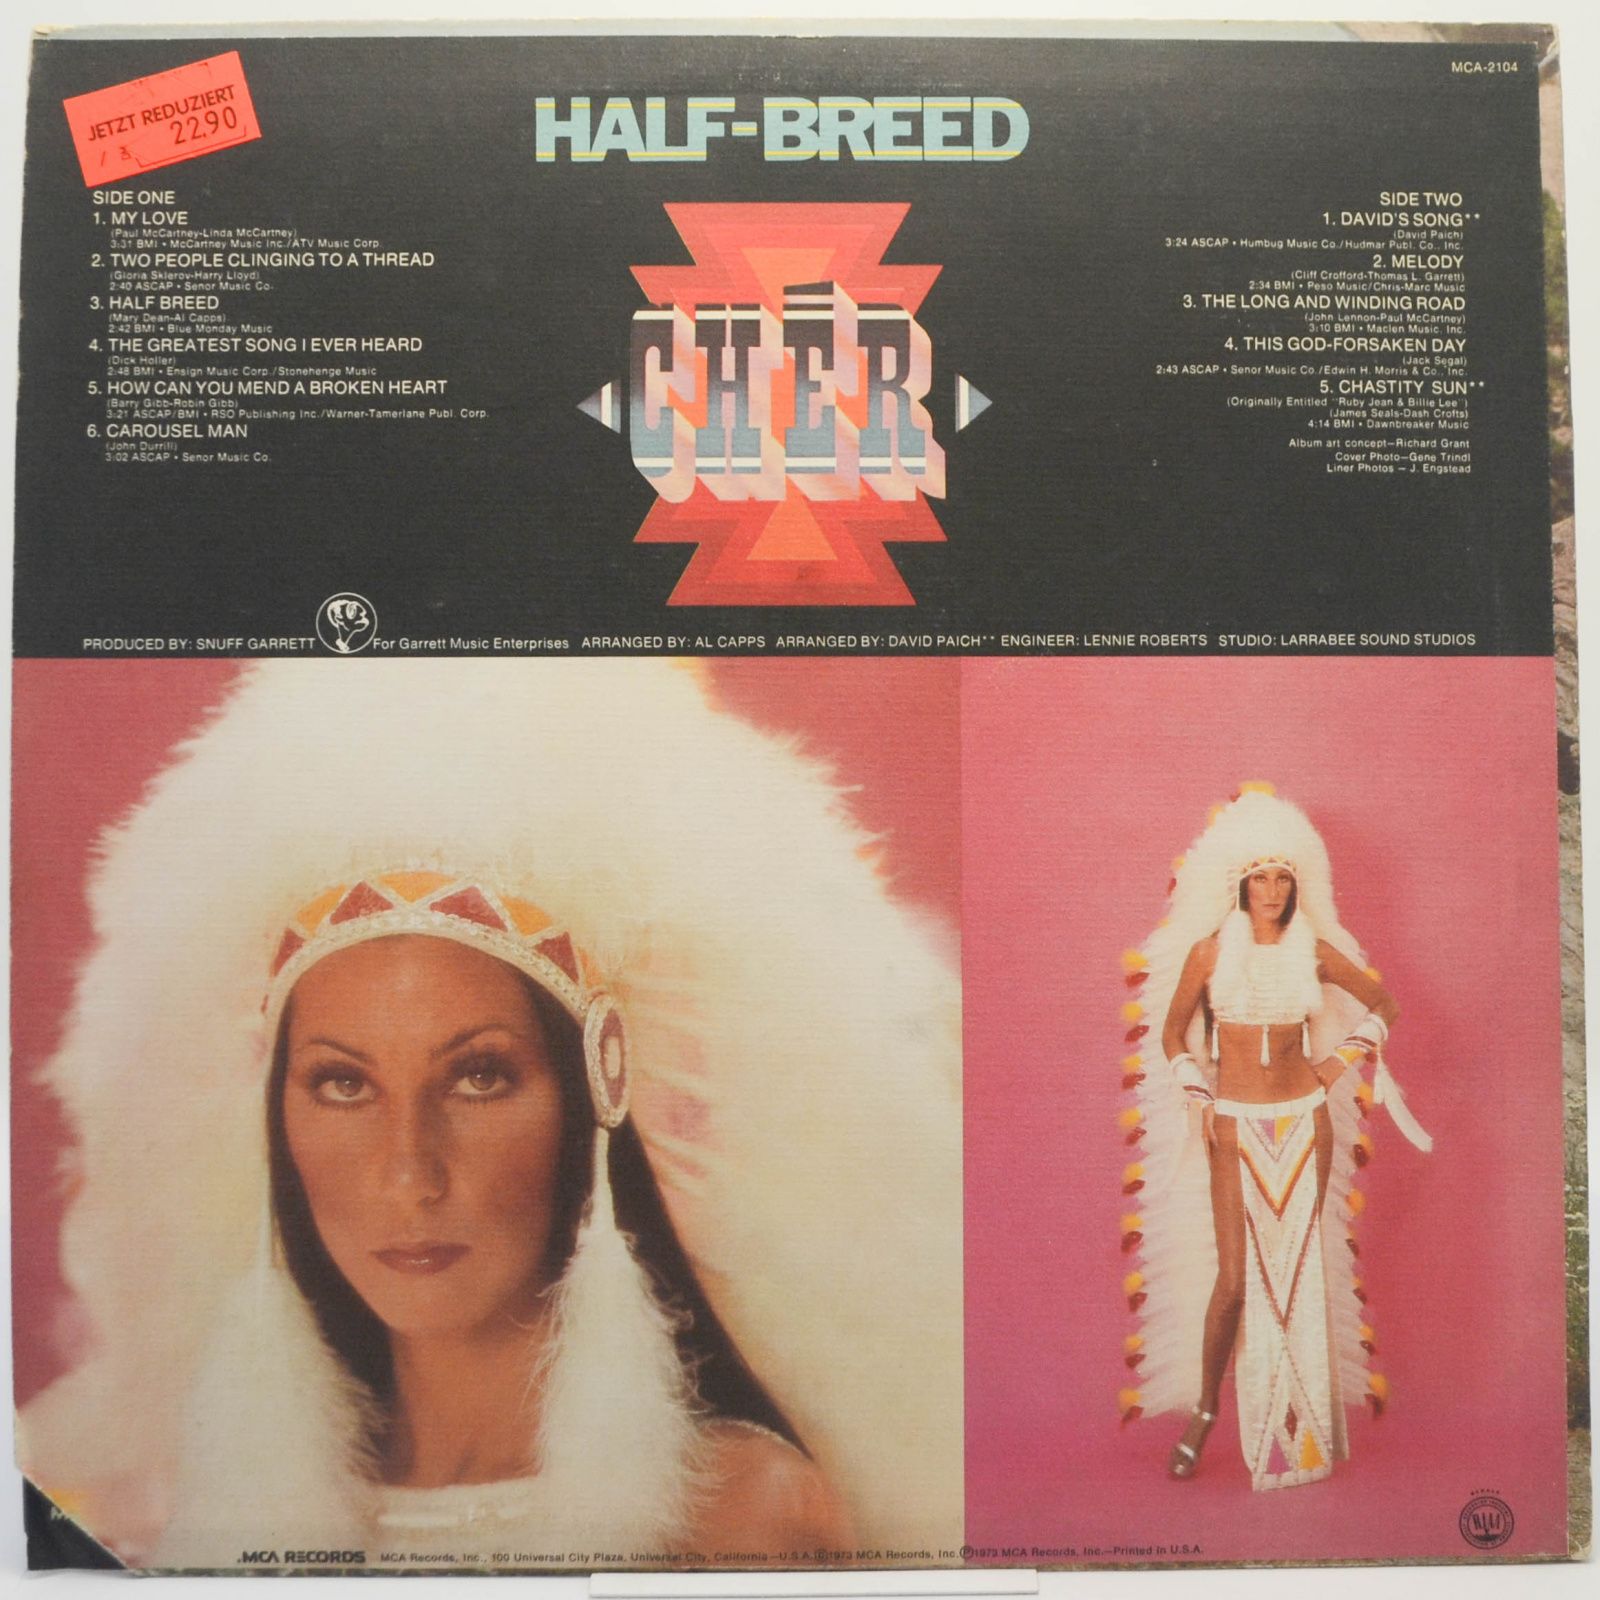 Cher — Half-Breed, 1973